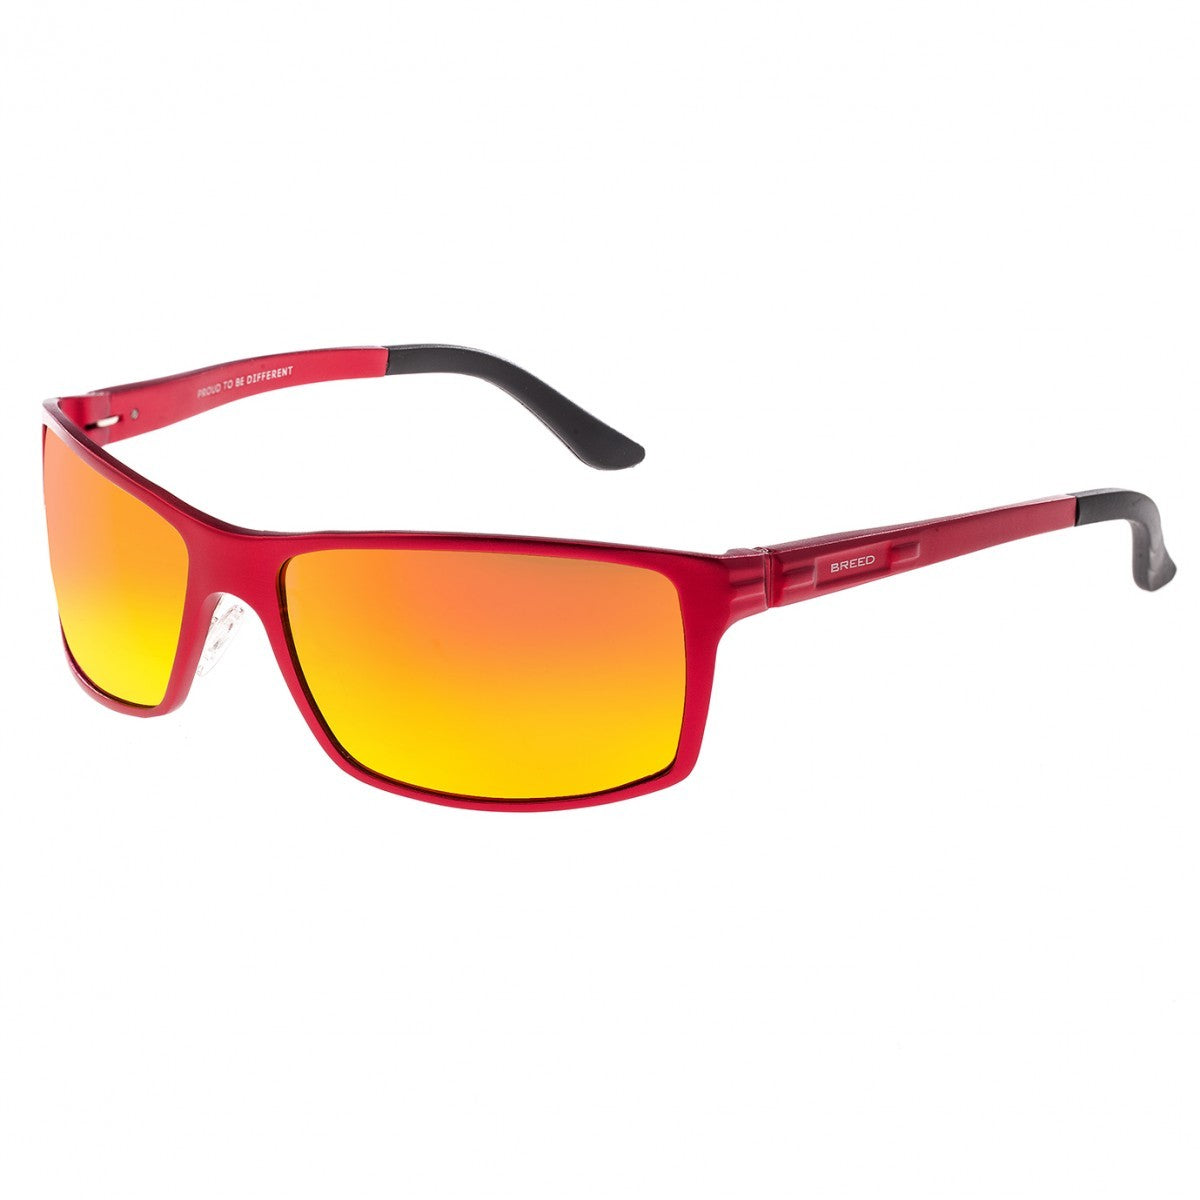 Breed Kaskade Aluminium Polarized Sunglasses - Red/Red-Yellow - BSG016RD